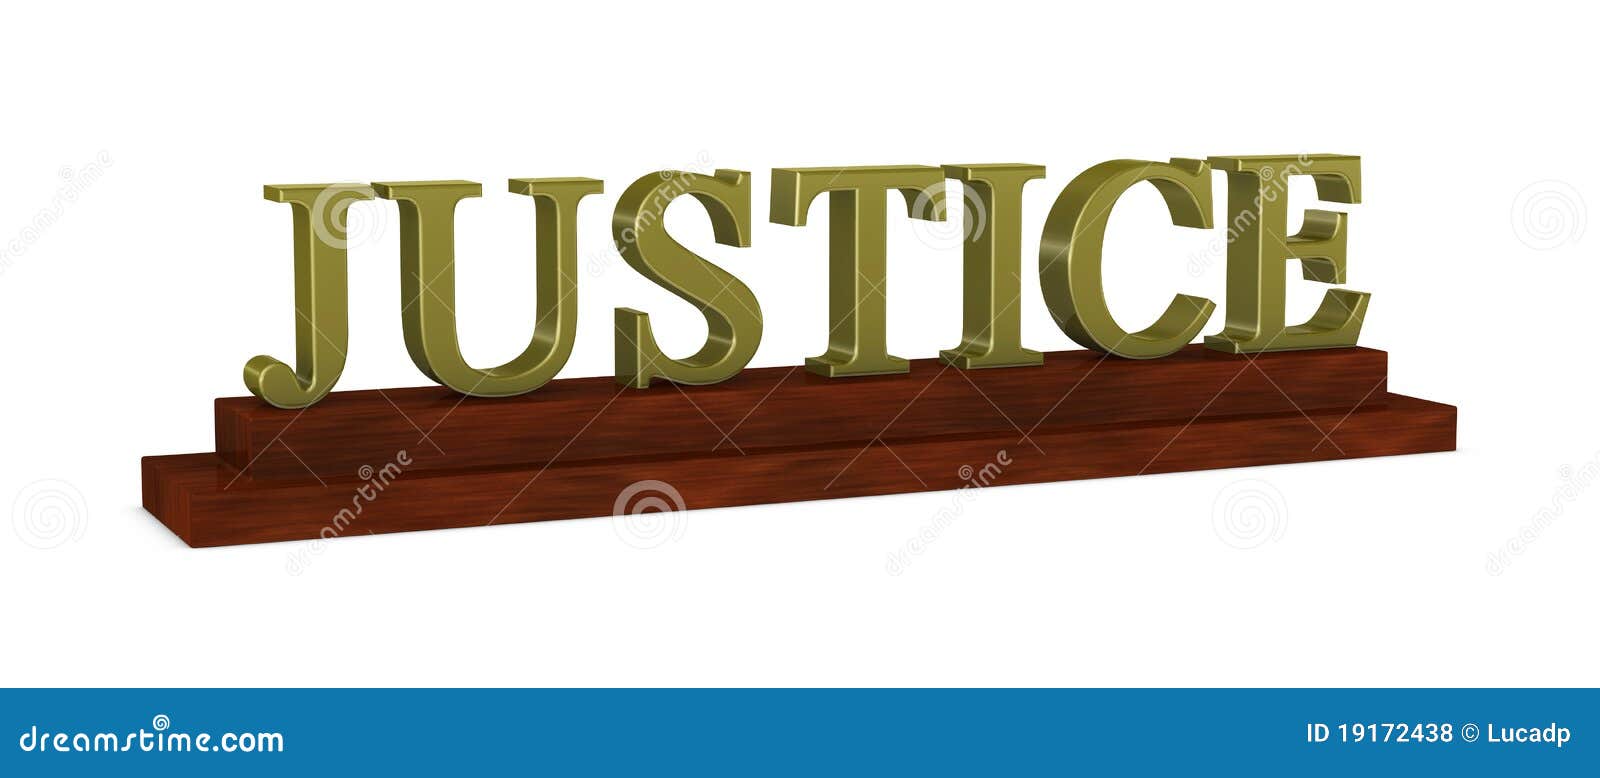 justice nameplate